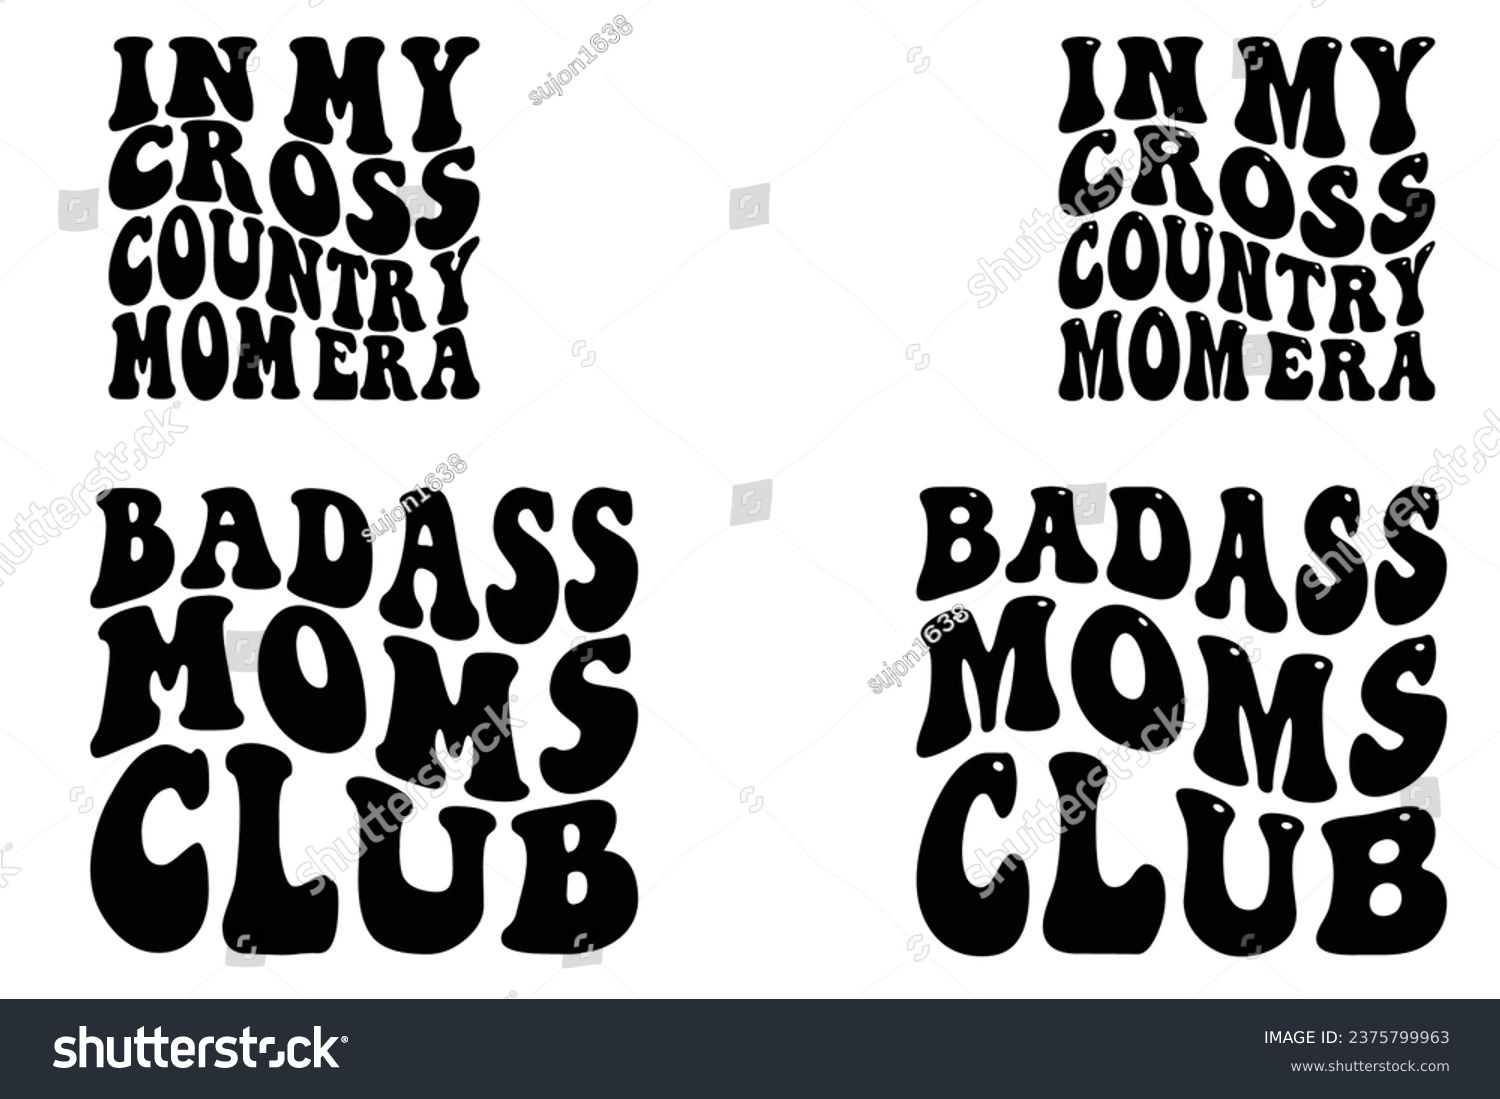 SVG of  In my cross-country mom era, badass moms club retro wavy t-shirt designs svg